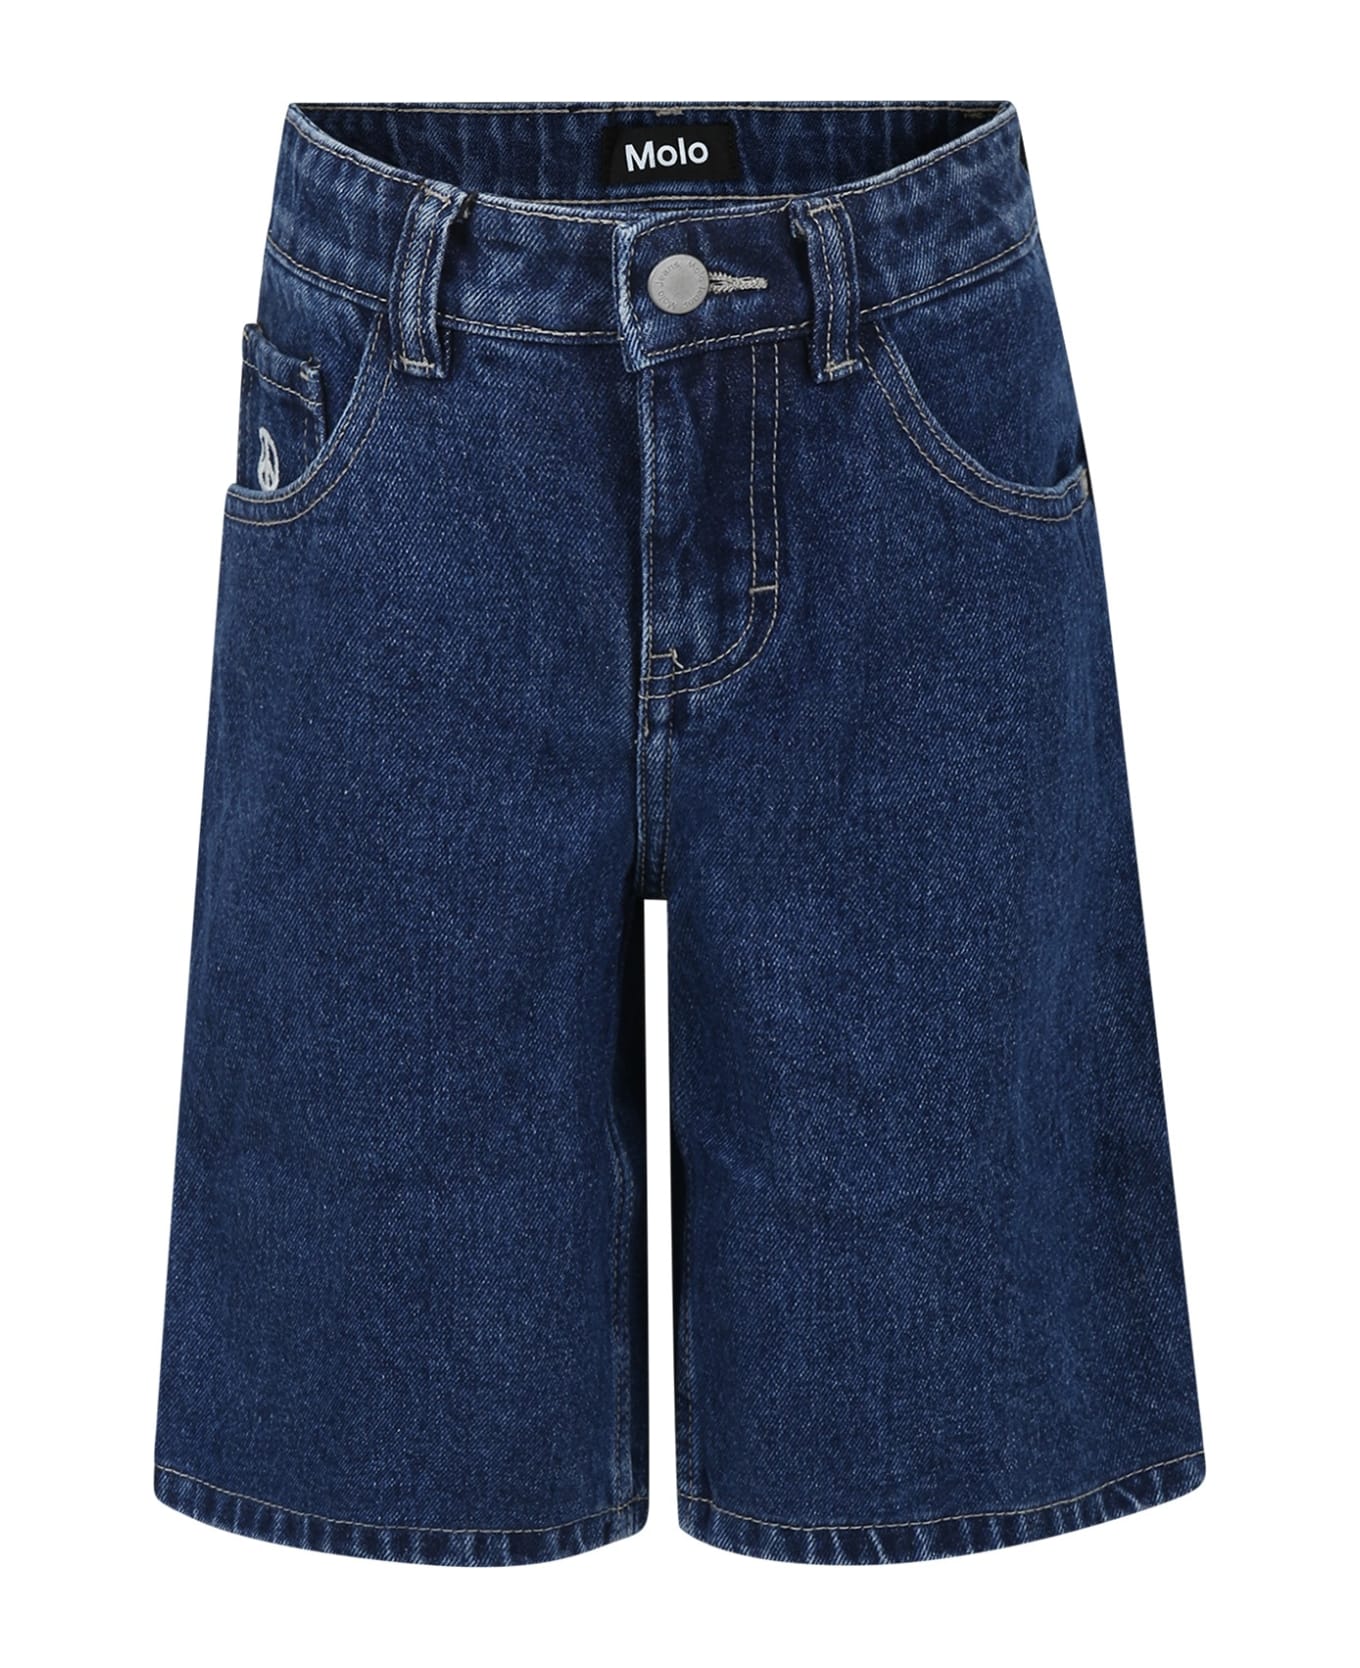 Molo Blue Shorts For Boy With Logo - Denim